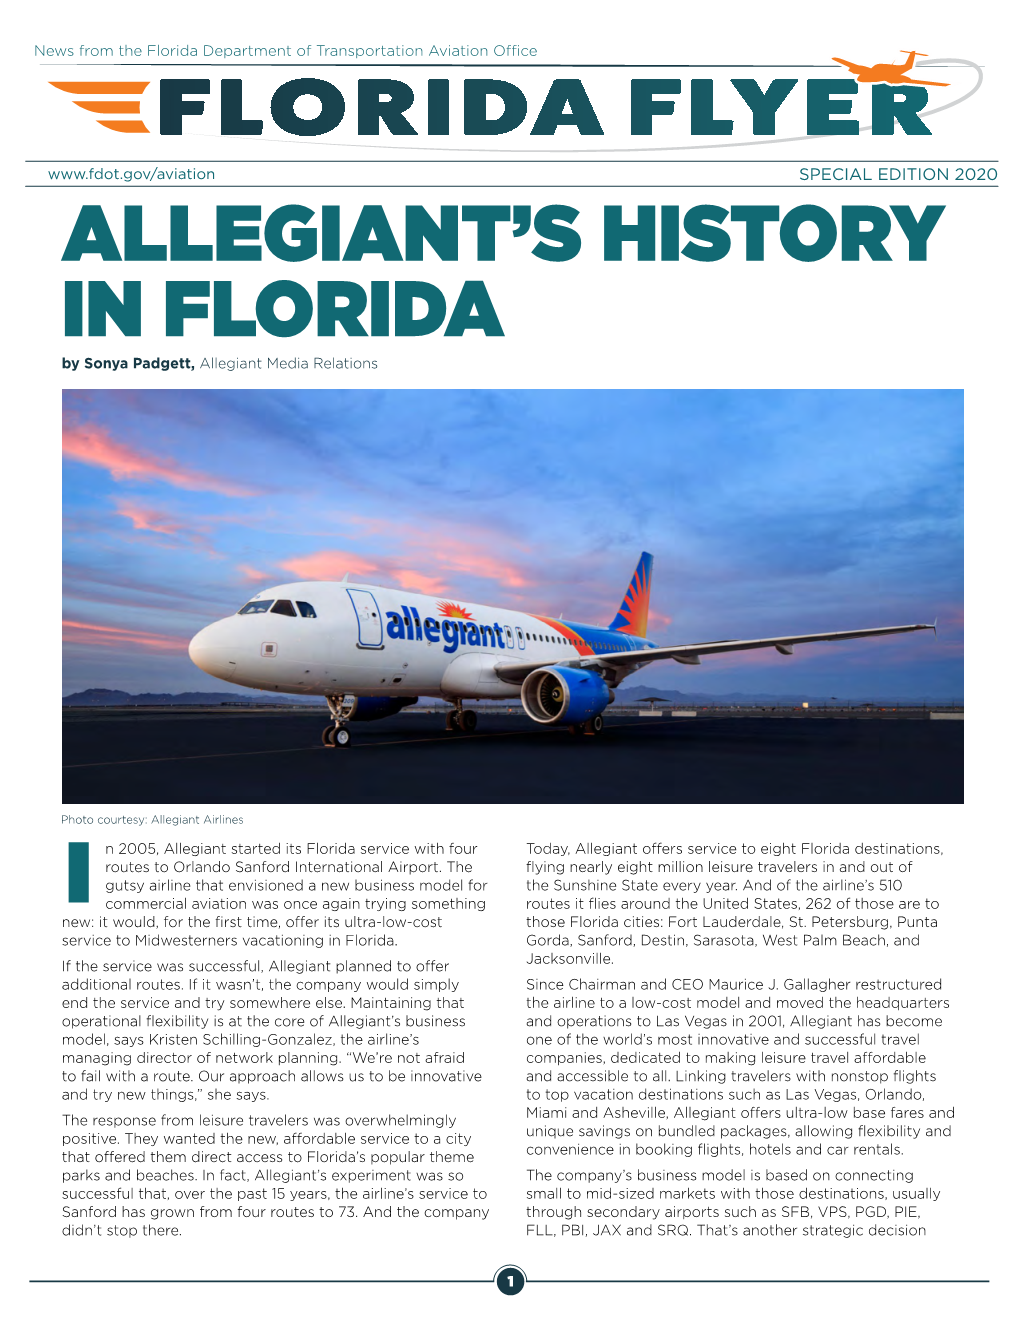 Allegiant's History in Florida